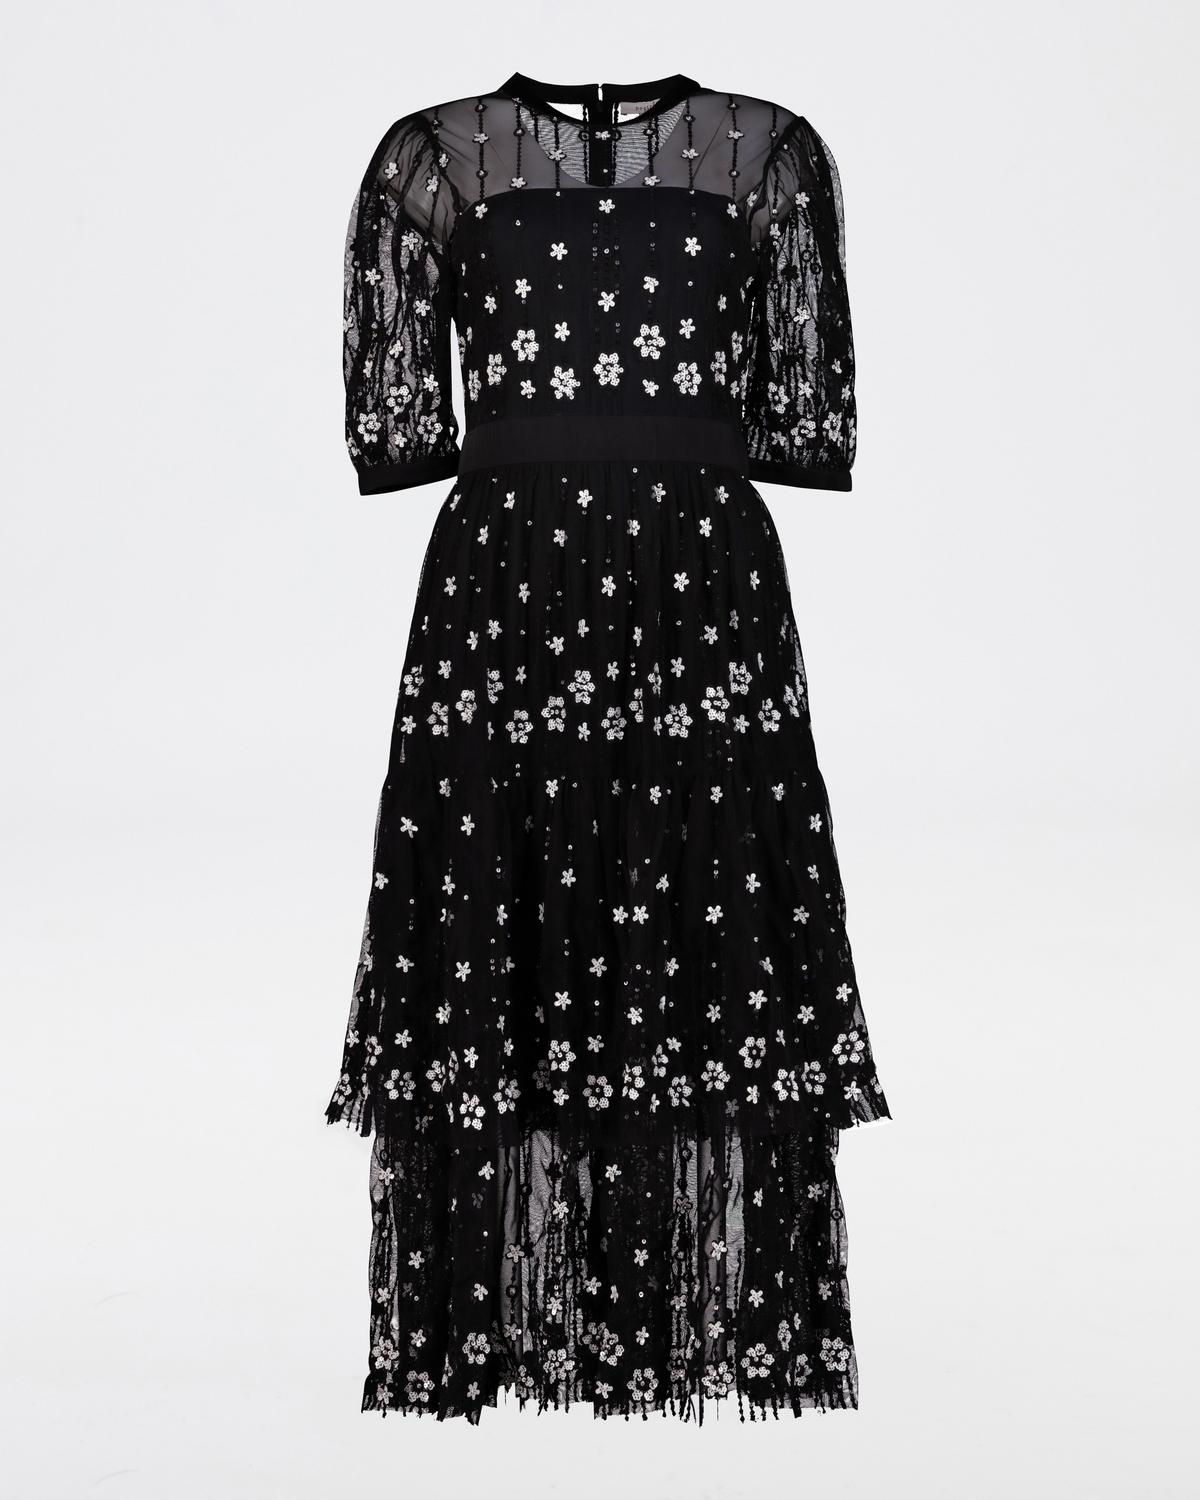 Rizzo Embellished Dress -  Black